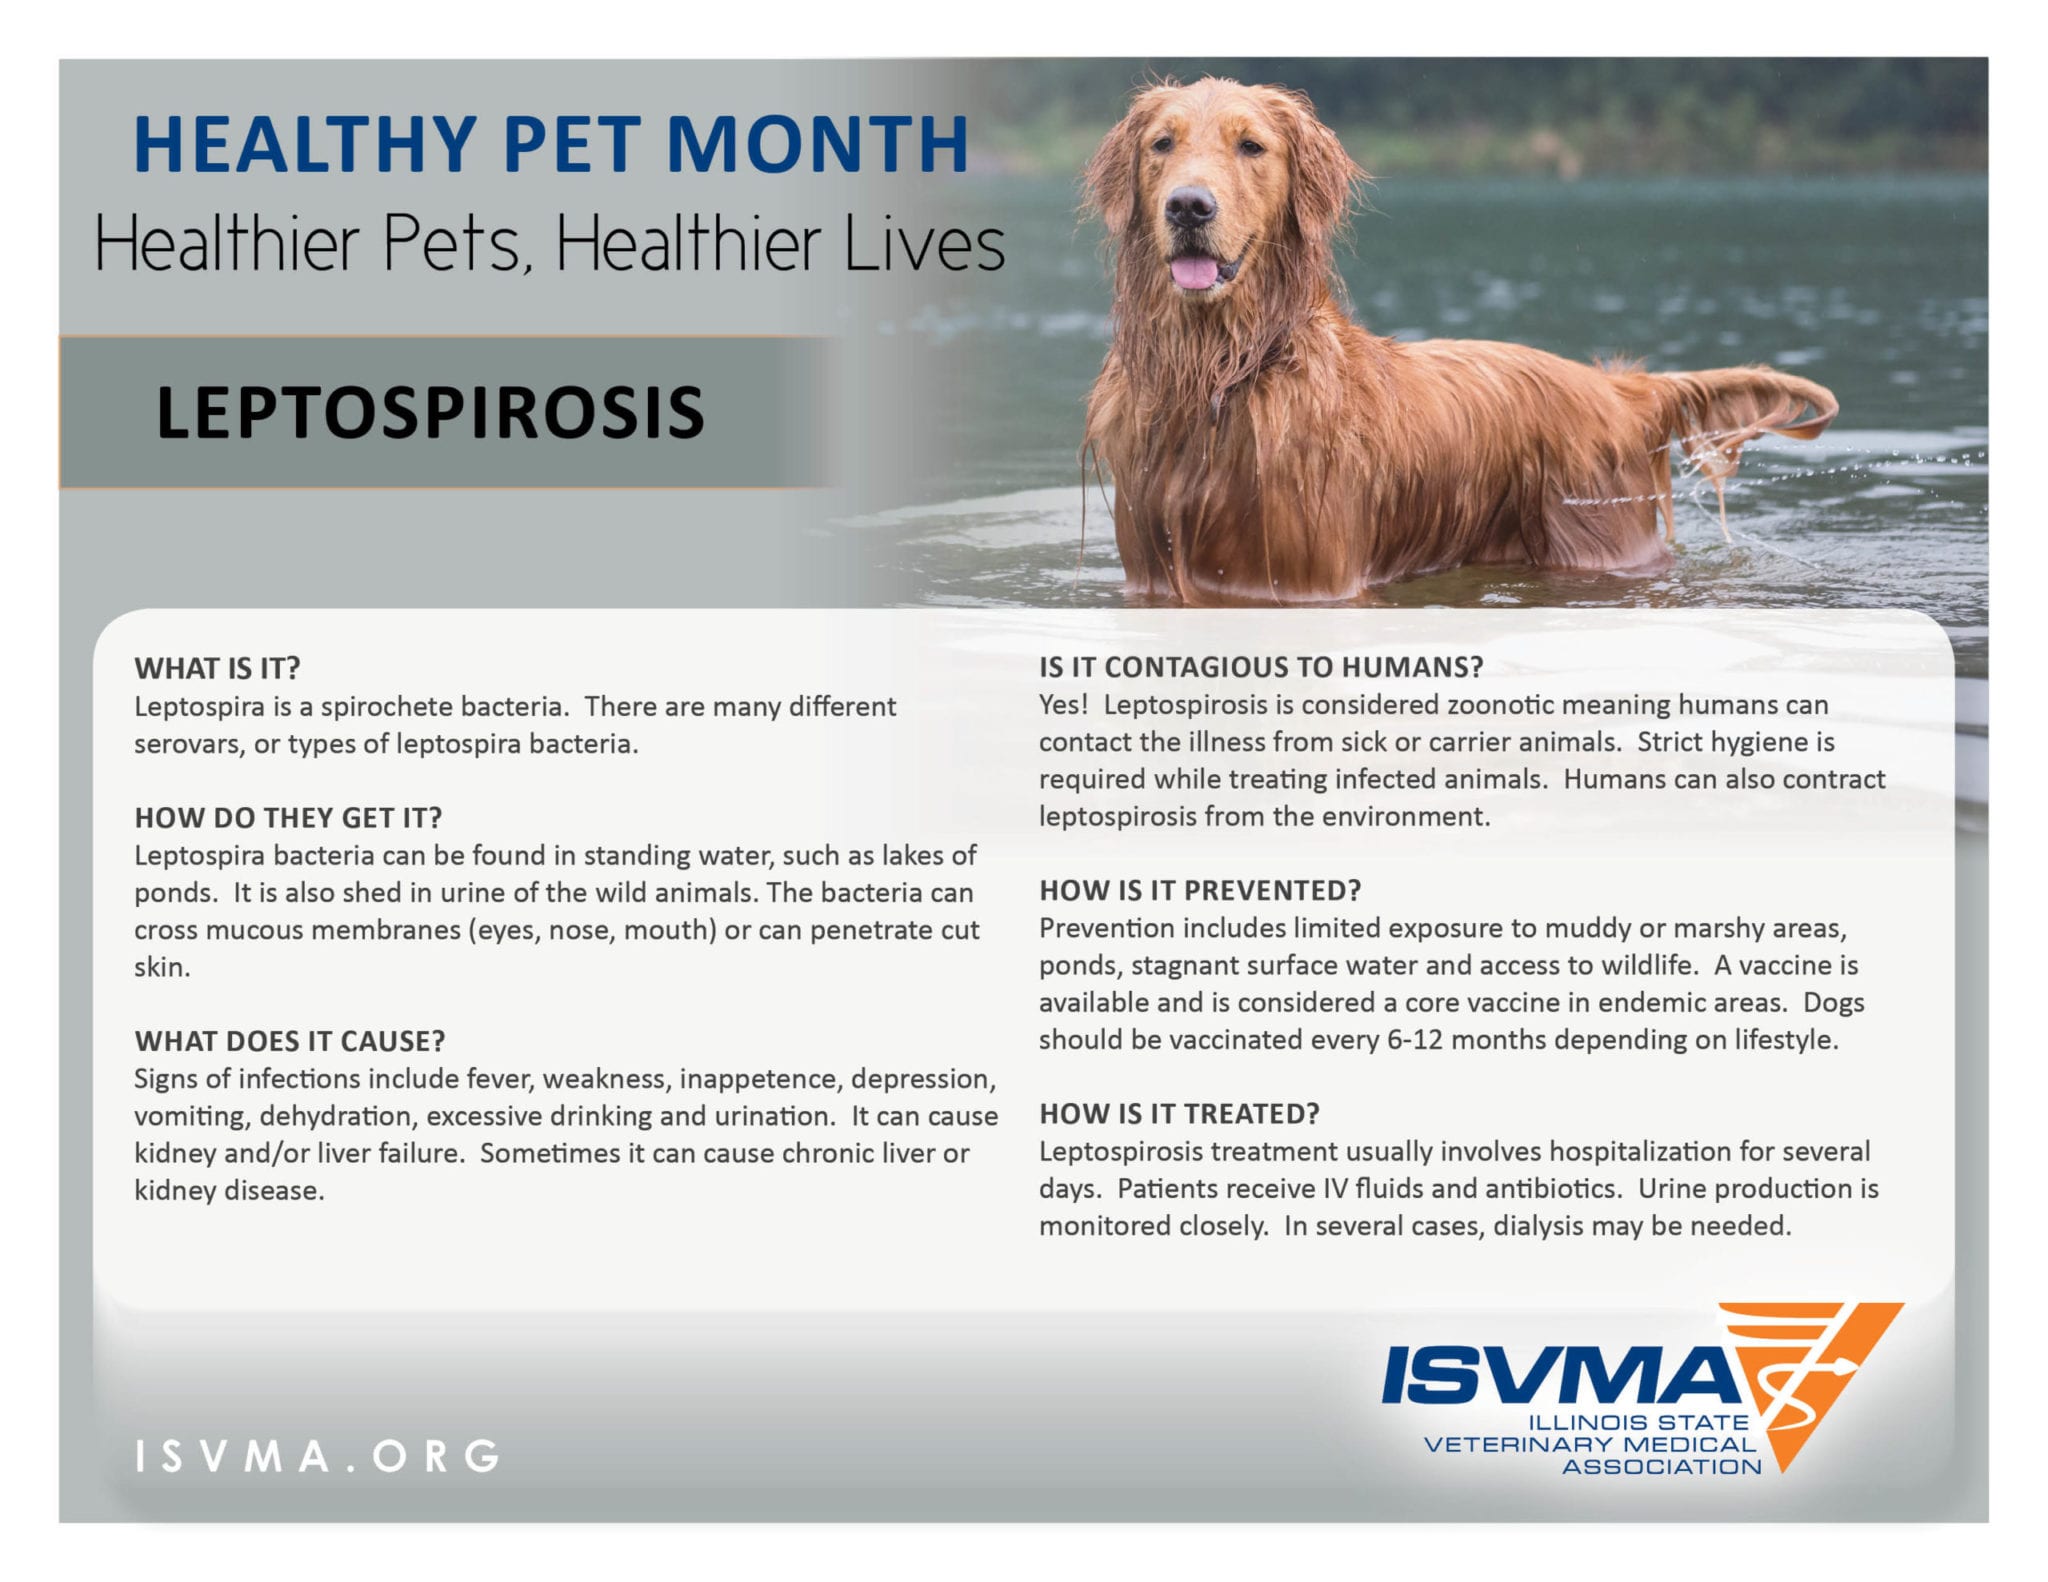 HPM_LEPTOSPIROSIS - Illinois State Veterinary Medical Association